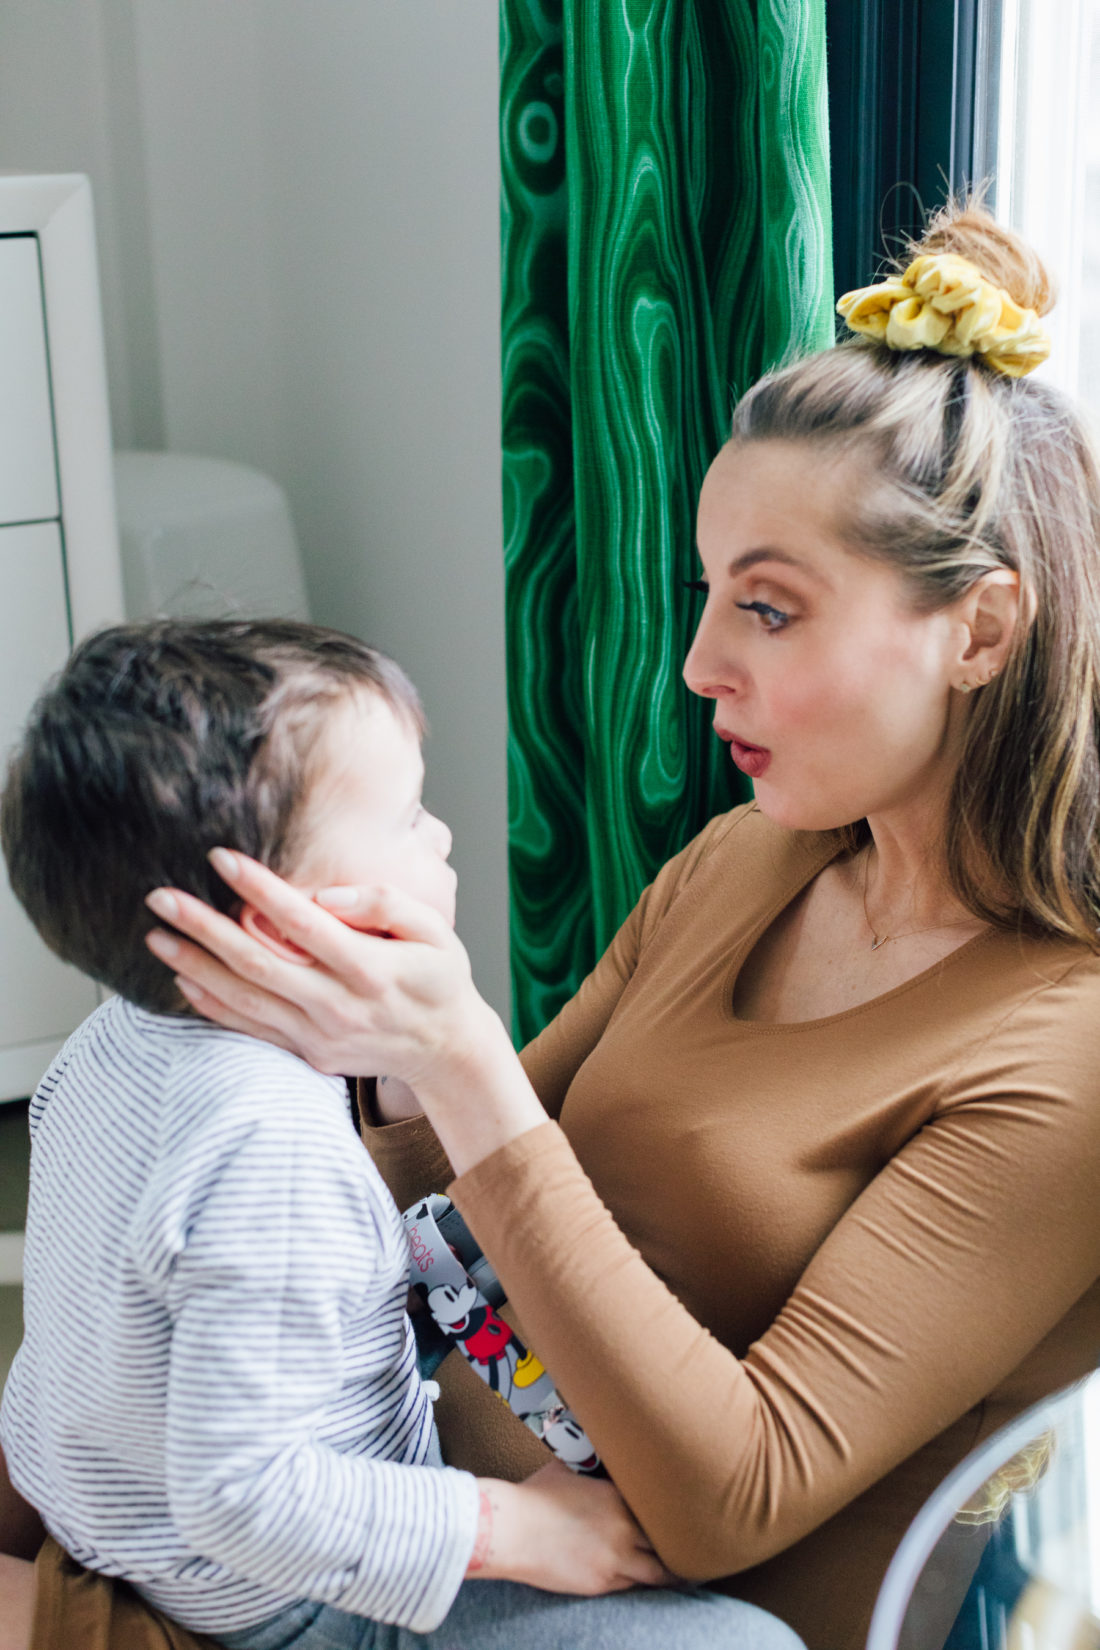 Blogger Eva Amurri discusses how she's preparing for baby #3